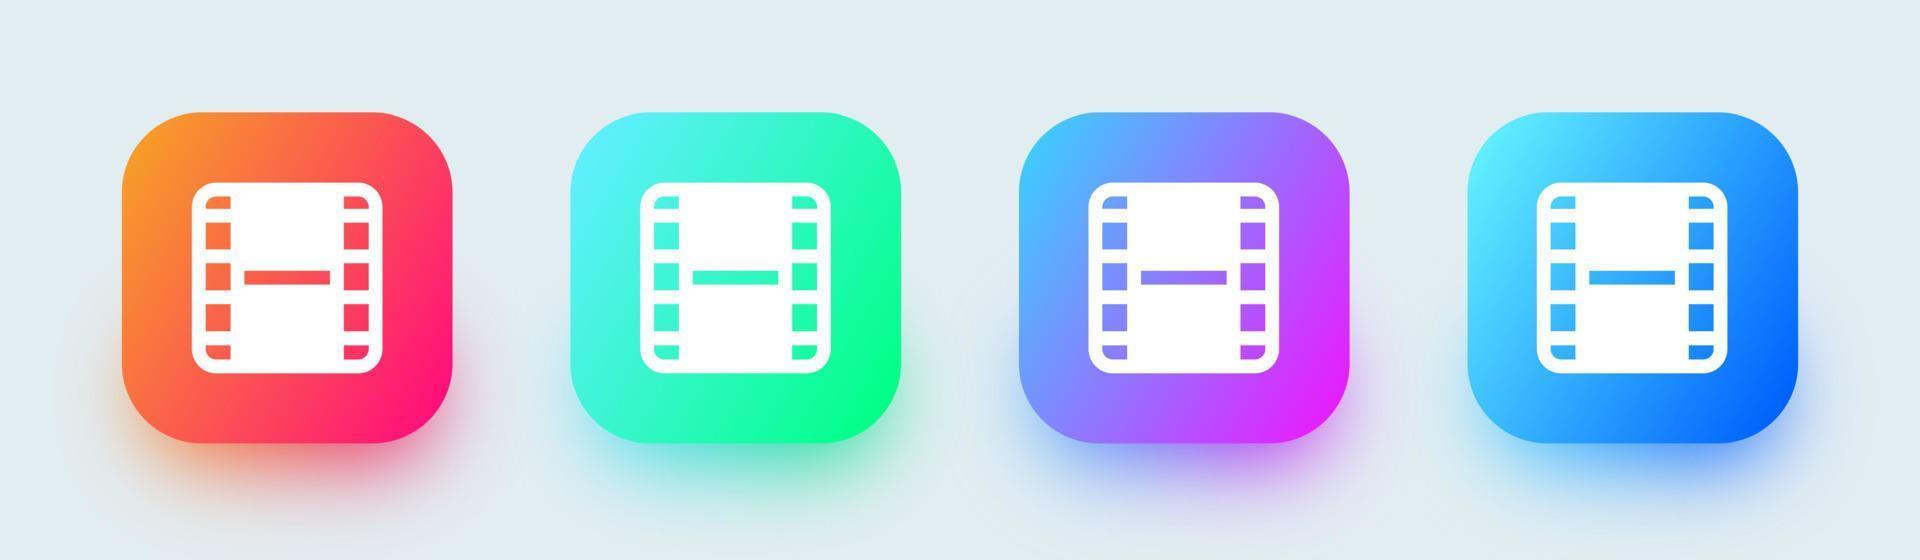 Film solid icon in square gradient colors. Film strip symbol for multimedia interface. vector